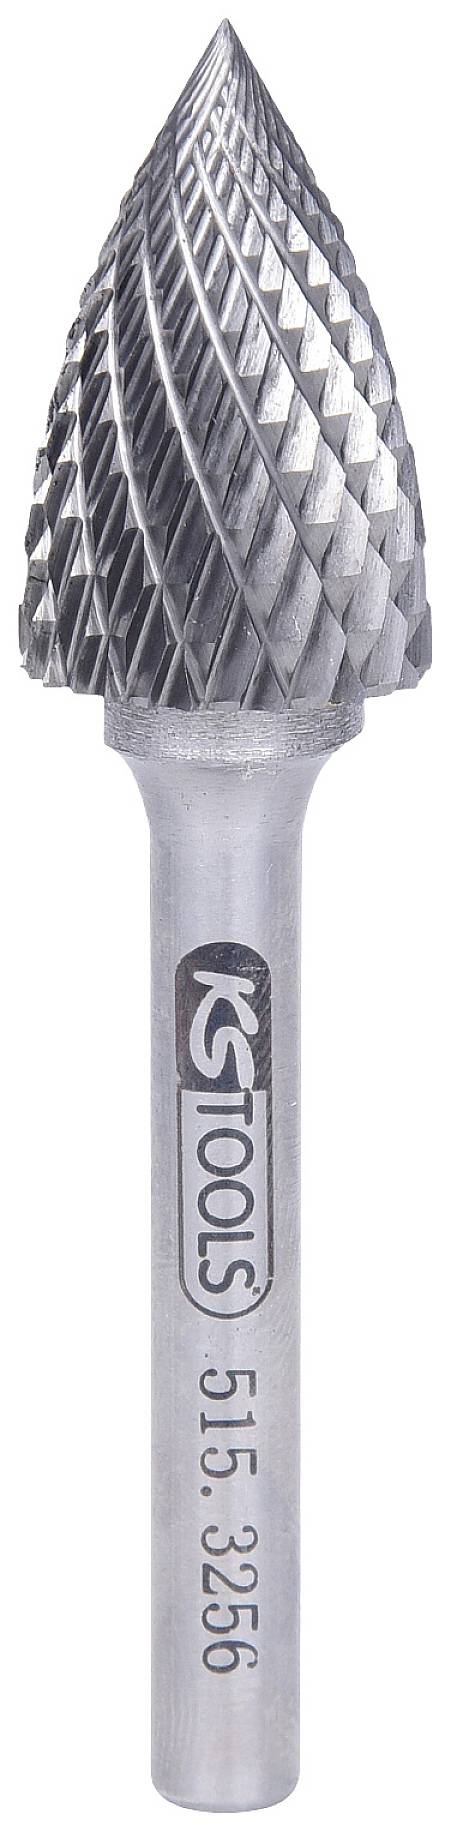 KS TOOLS Werkzeuge-Maschinen GmbH HM Spitzbogen-Frässtift Form G, 16mm (515.3256)